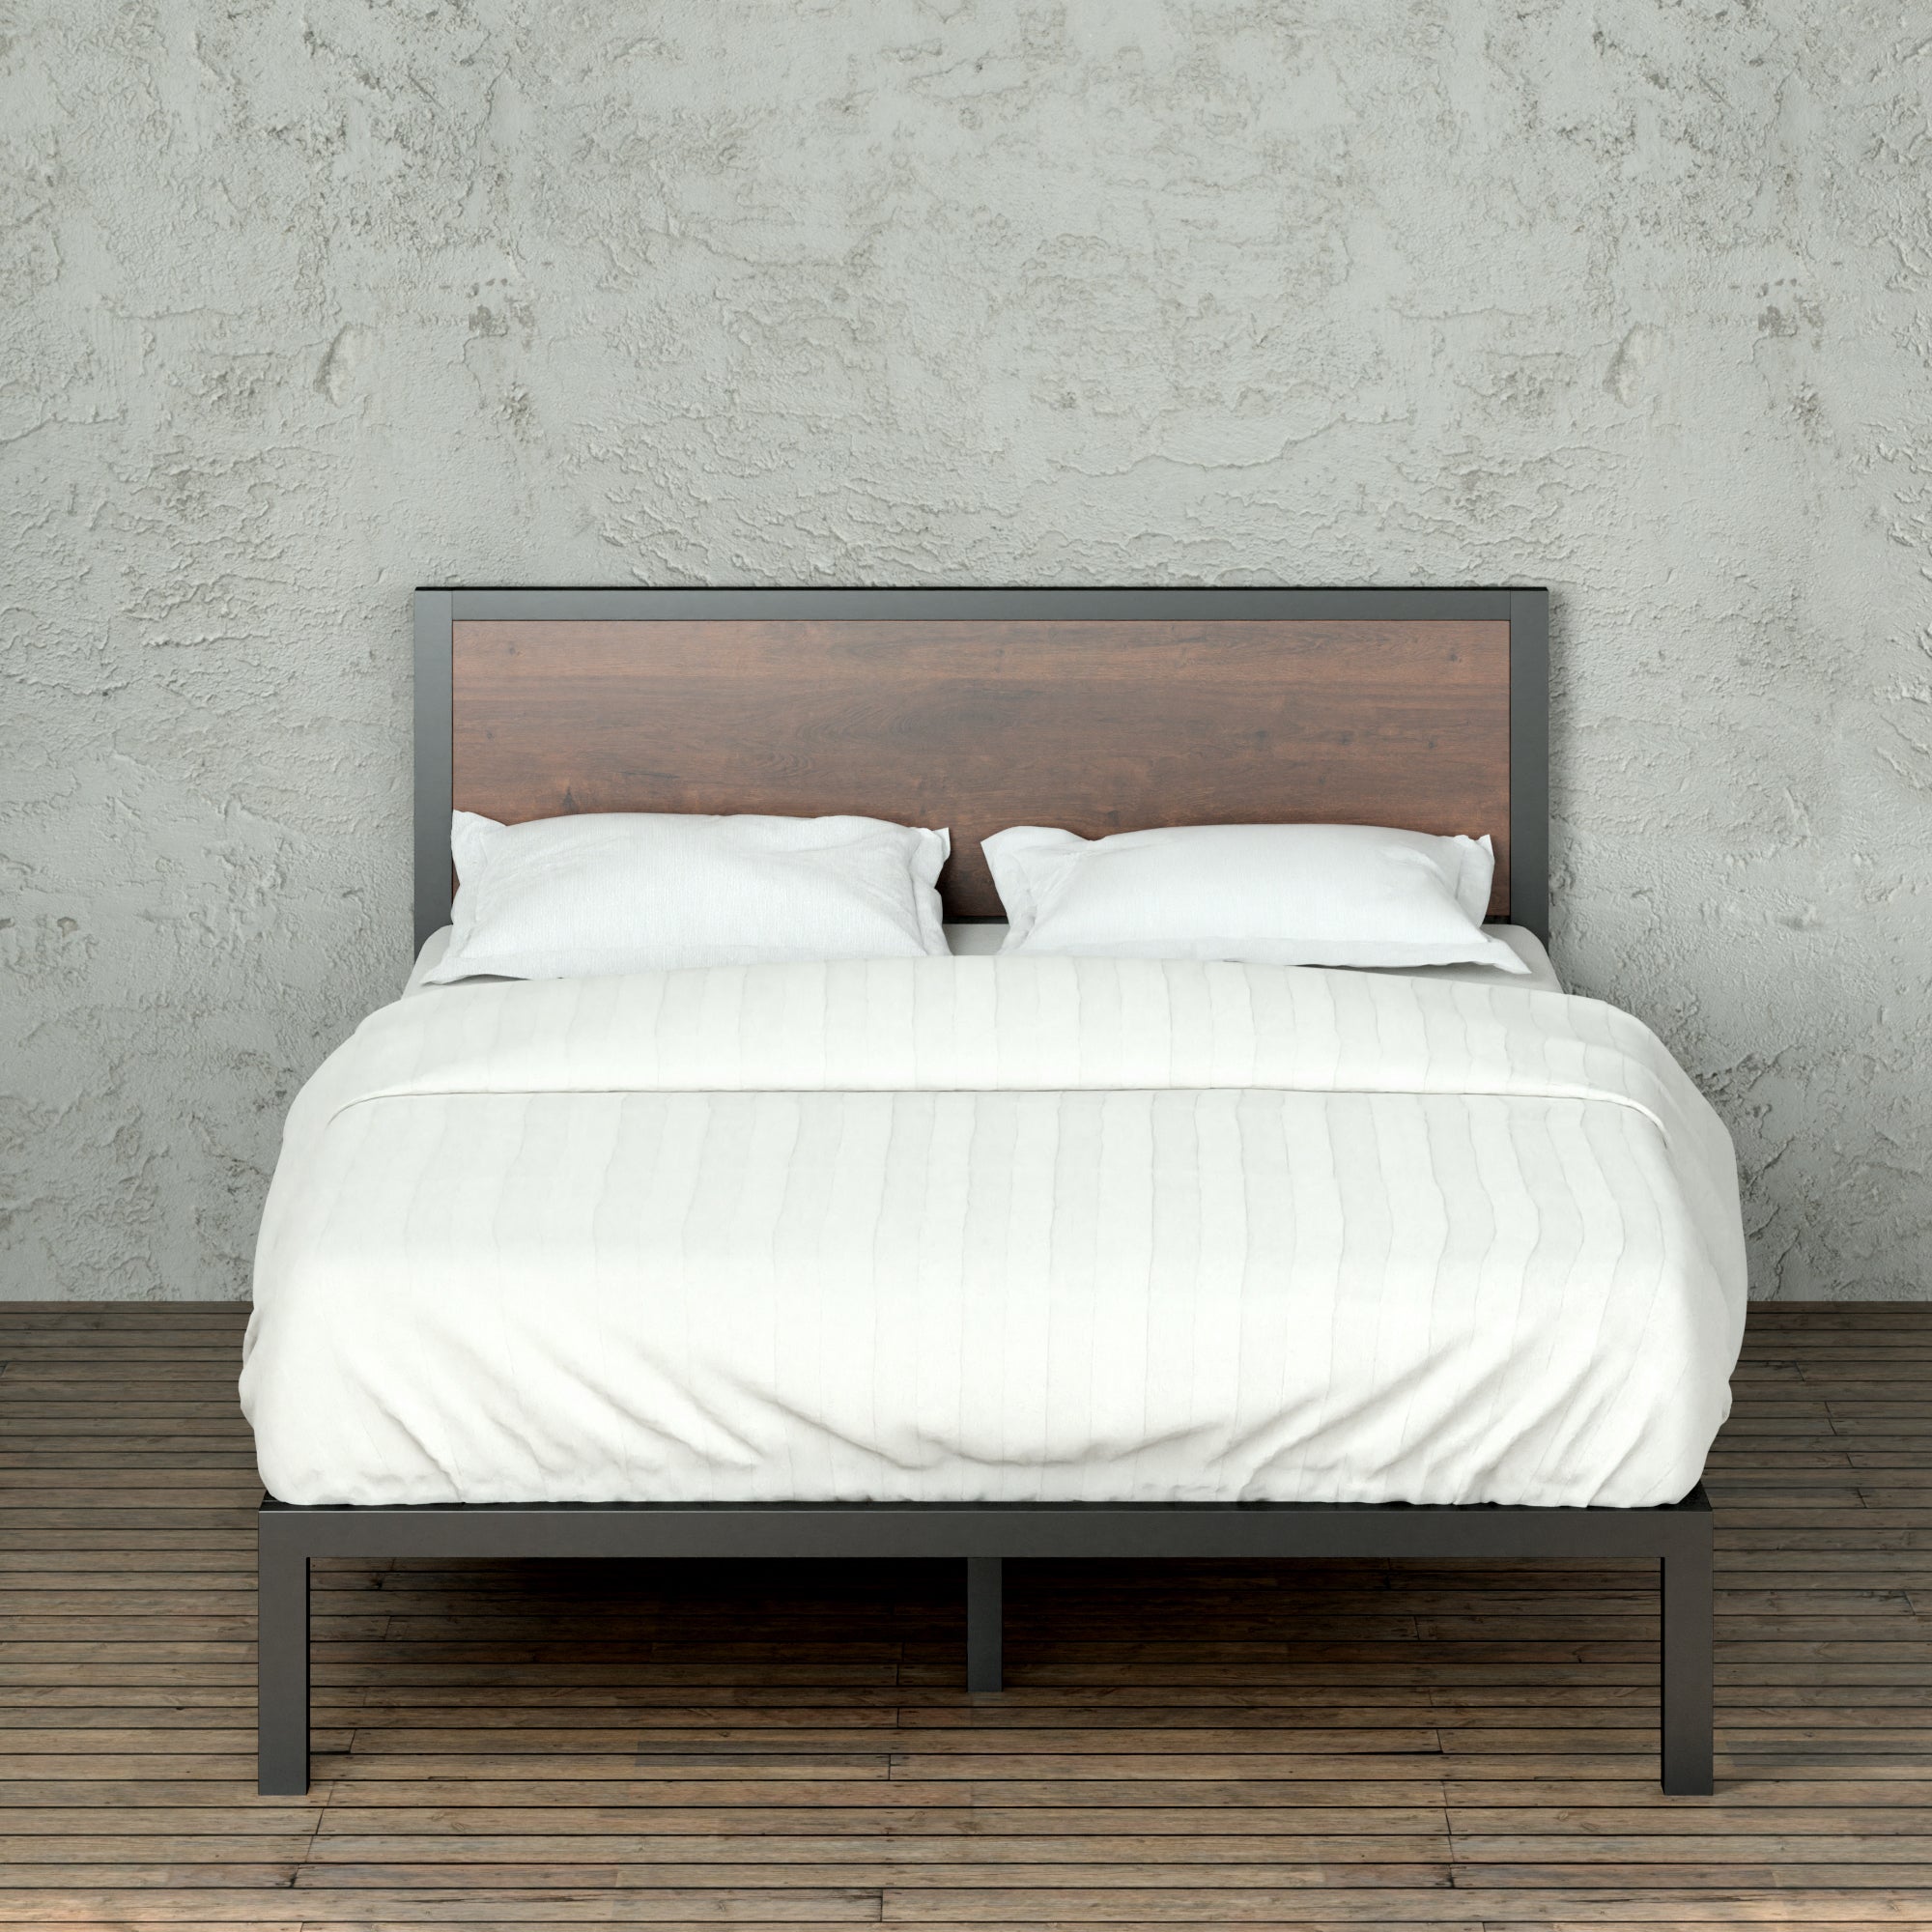 Mory Metal And Wood Platform Bed Frame Full